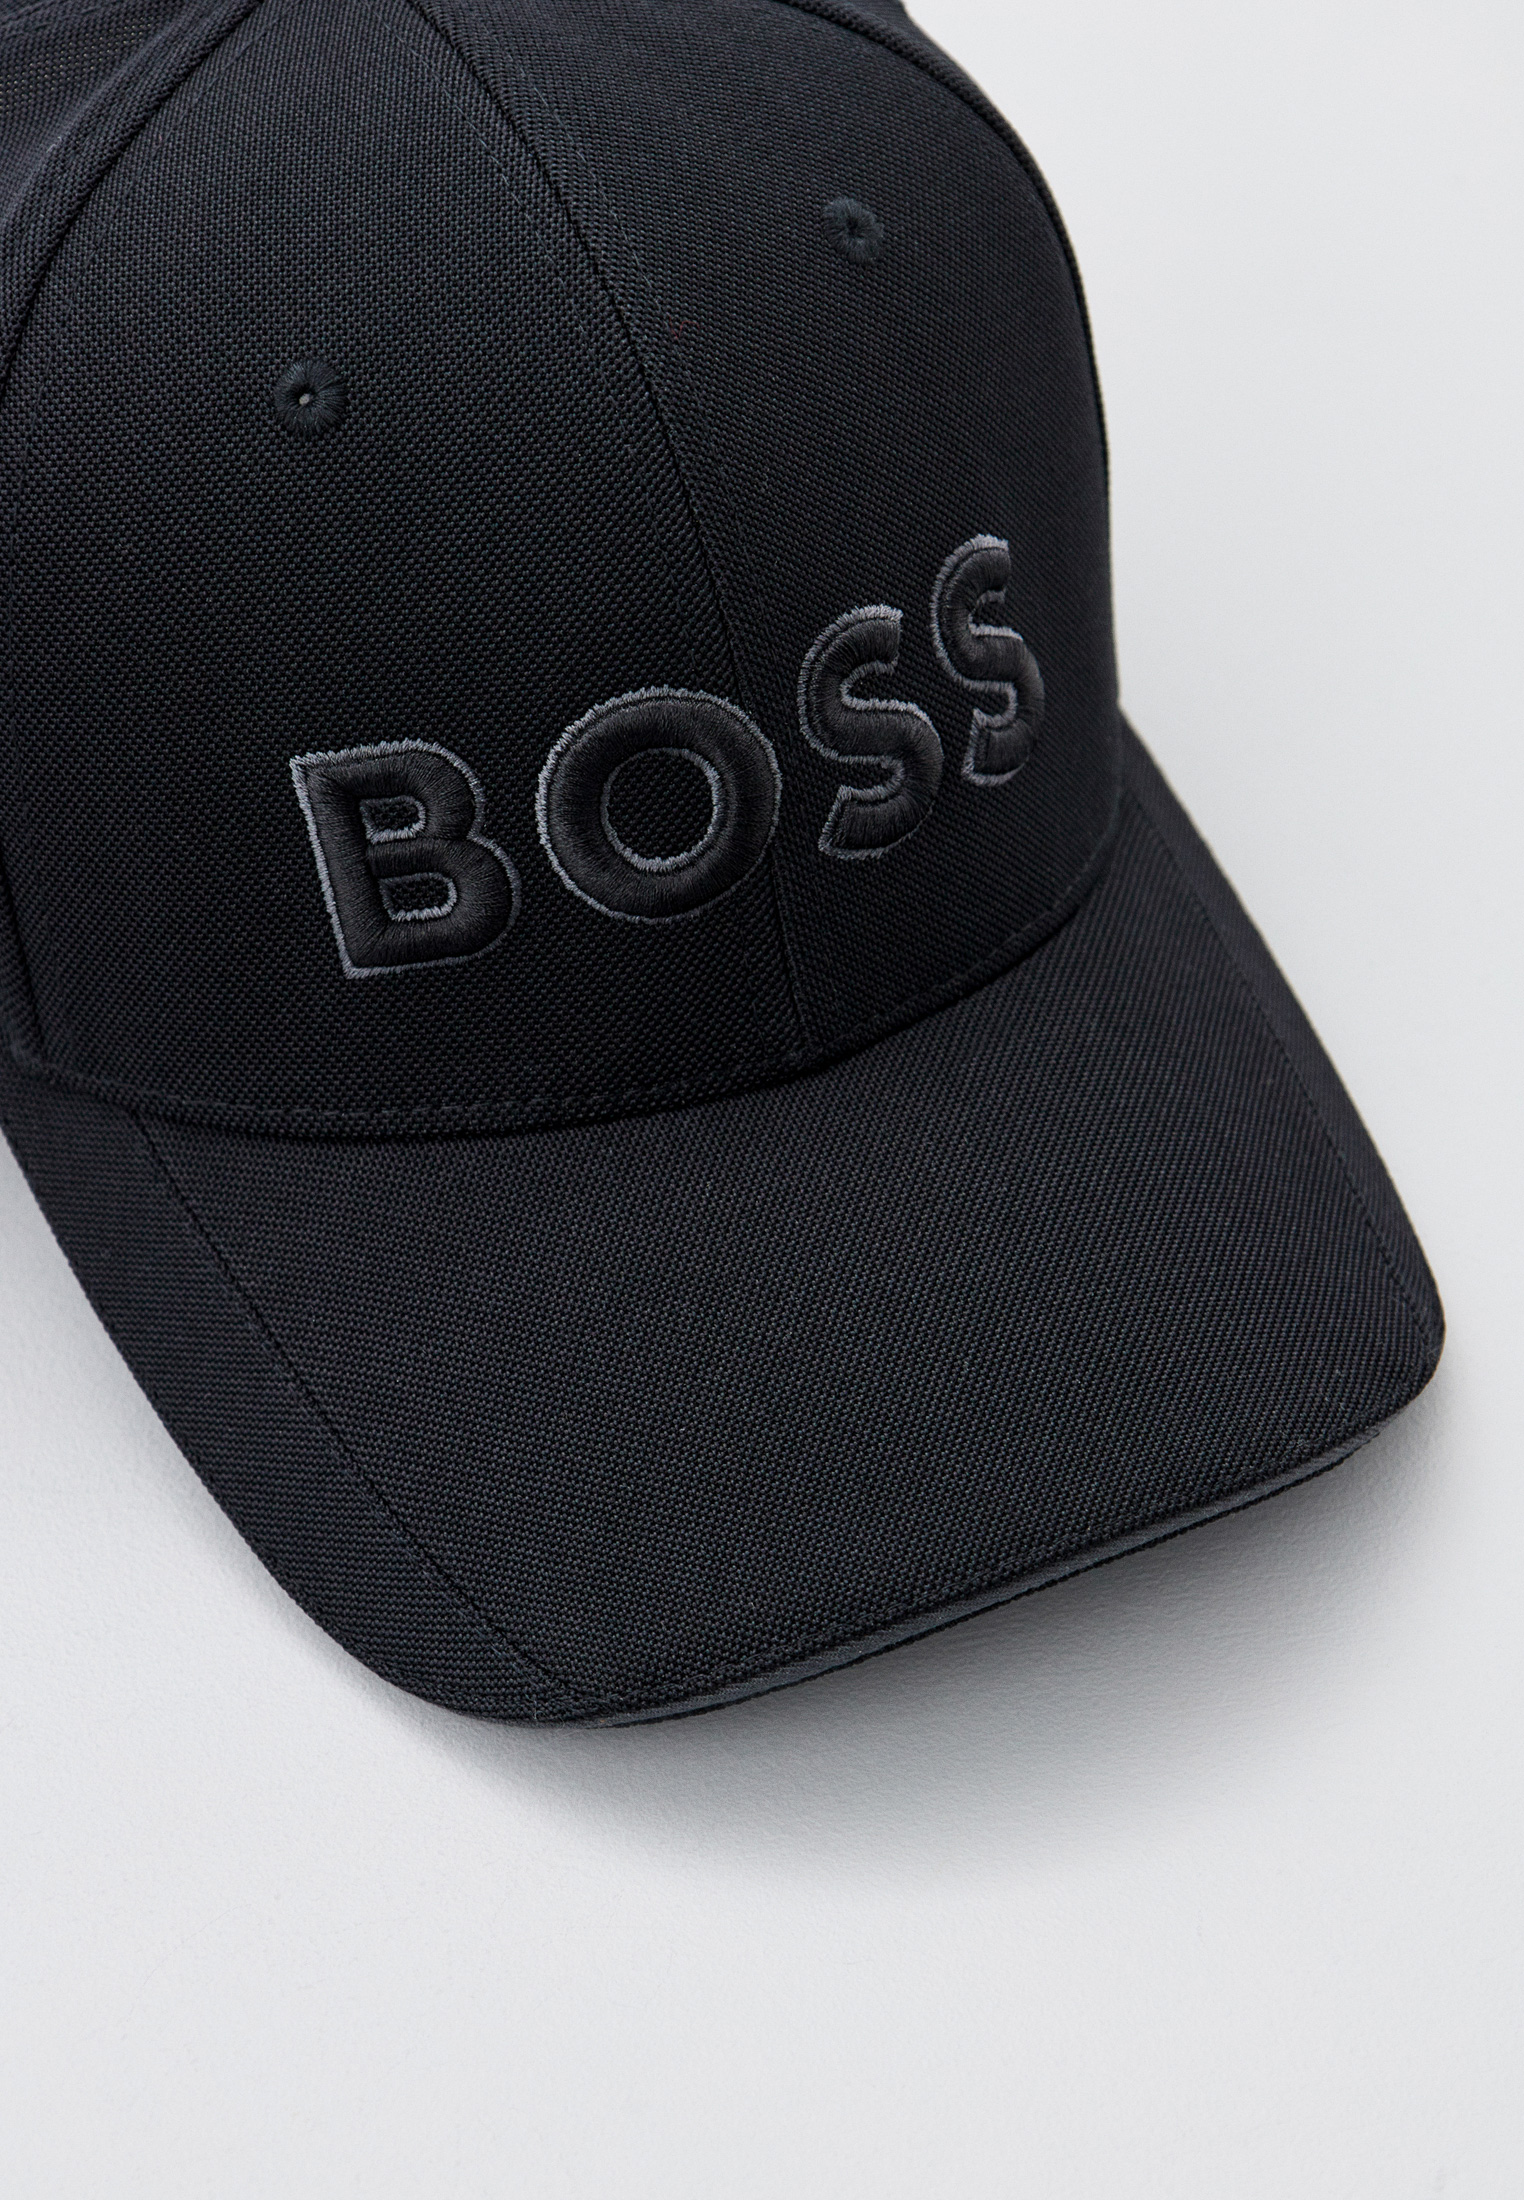 Бейсболка Boss (Босс) 50468246: изображение 8